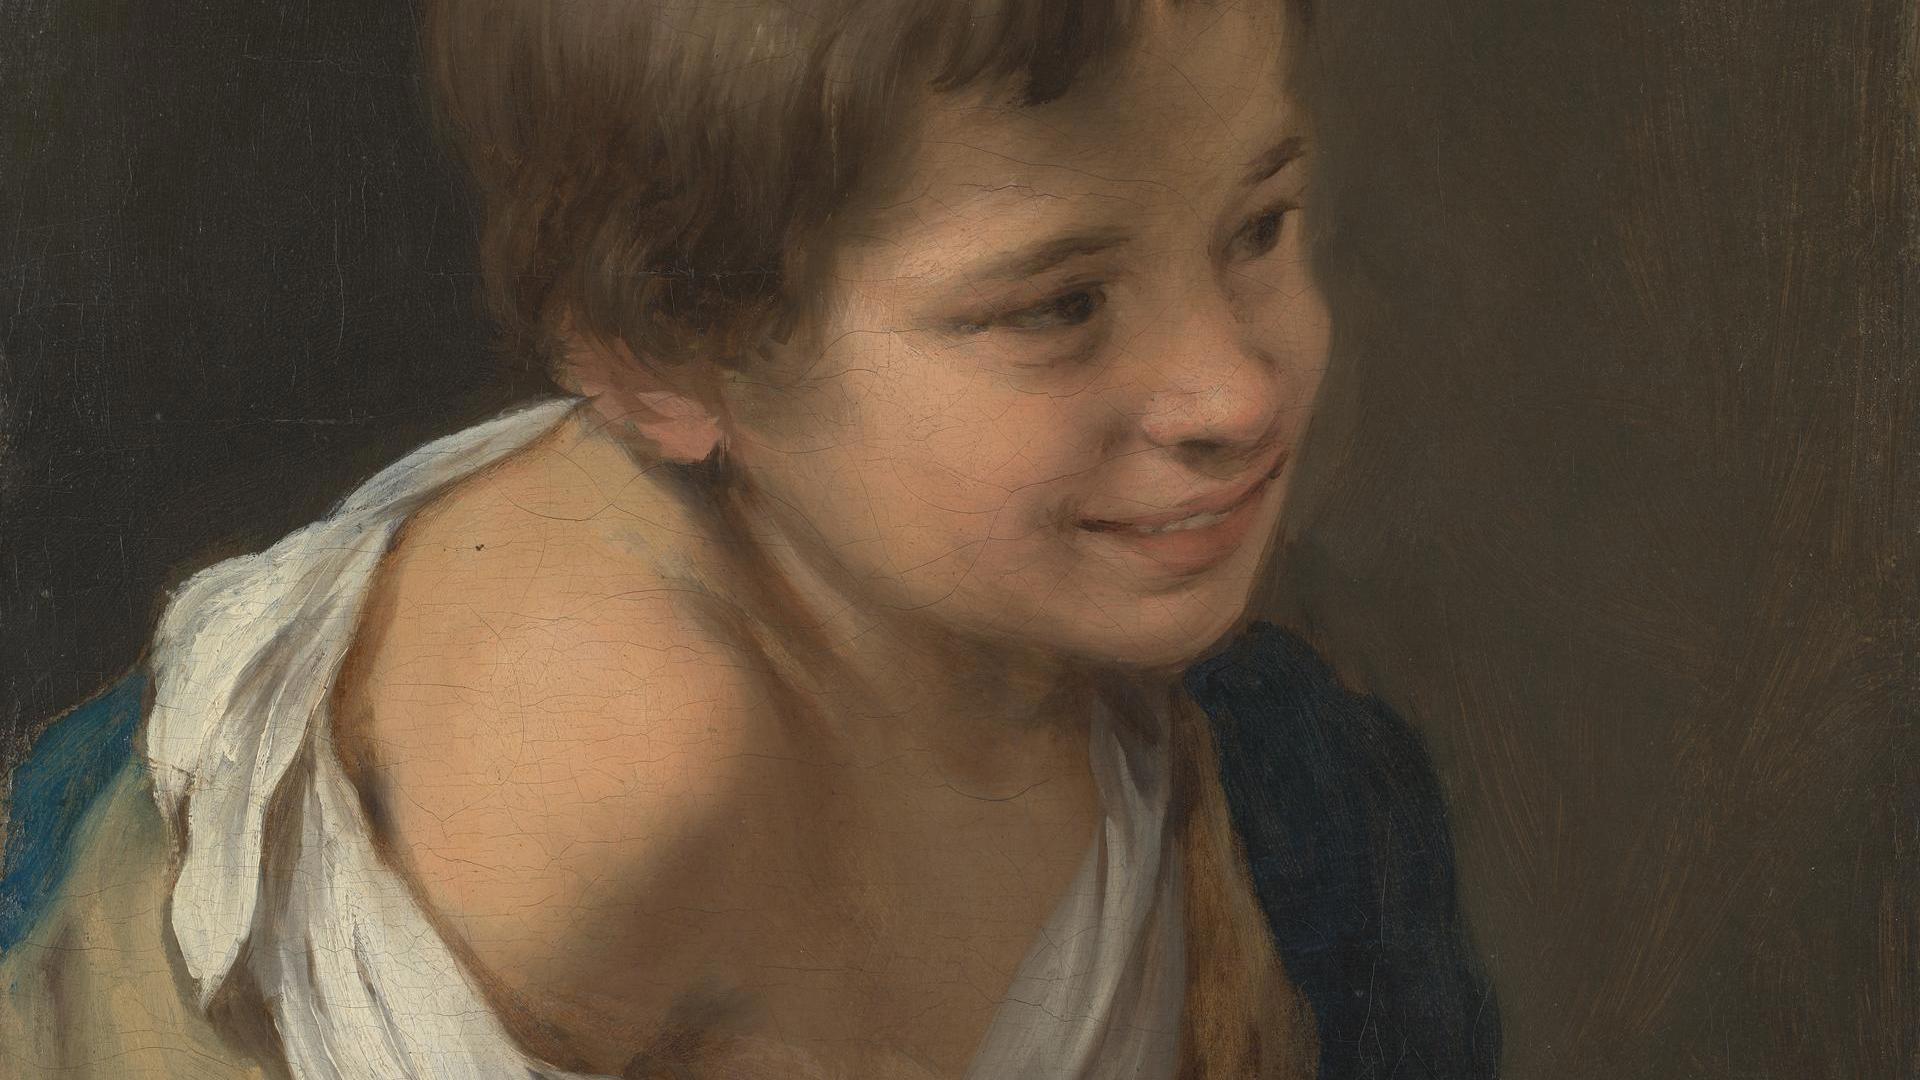 A Peasant Boy leaning on a Sill by Bartolomé Esteban Murillo